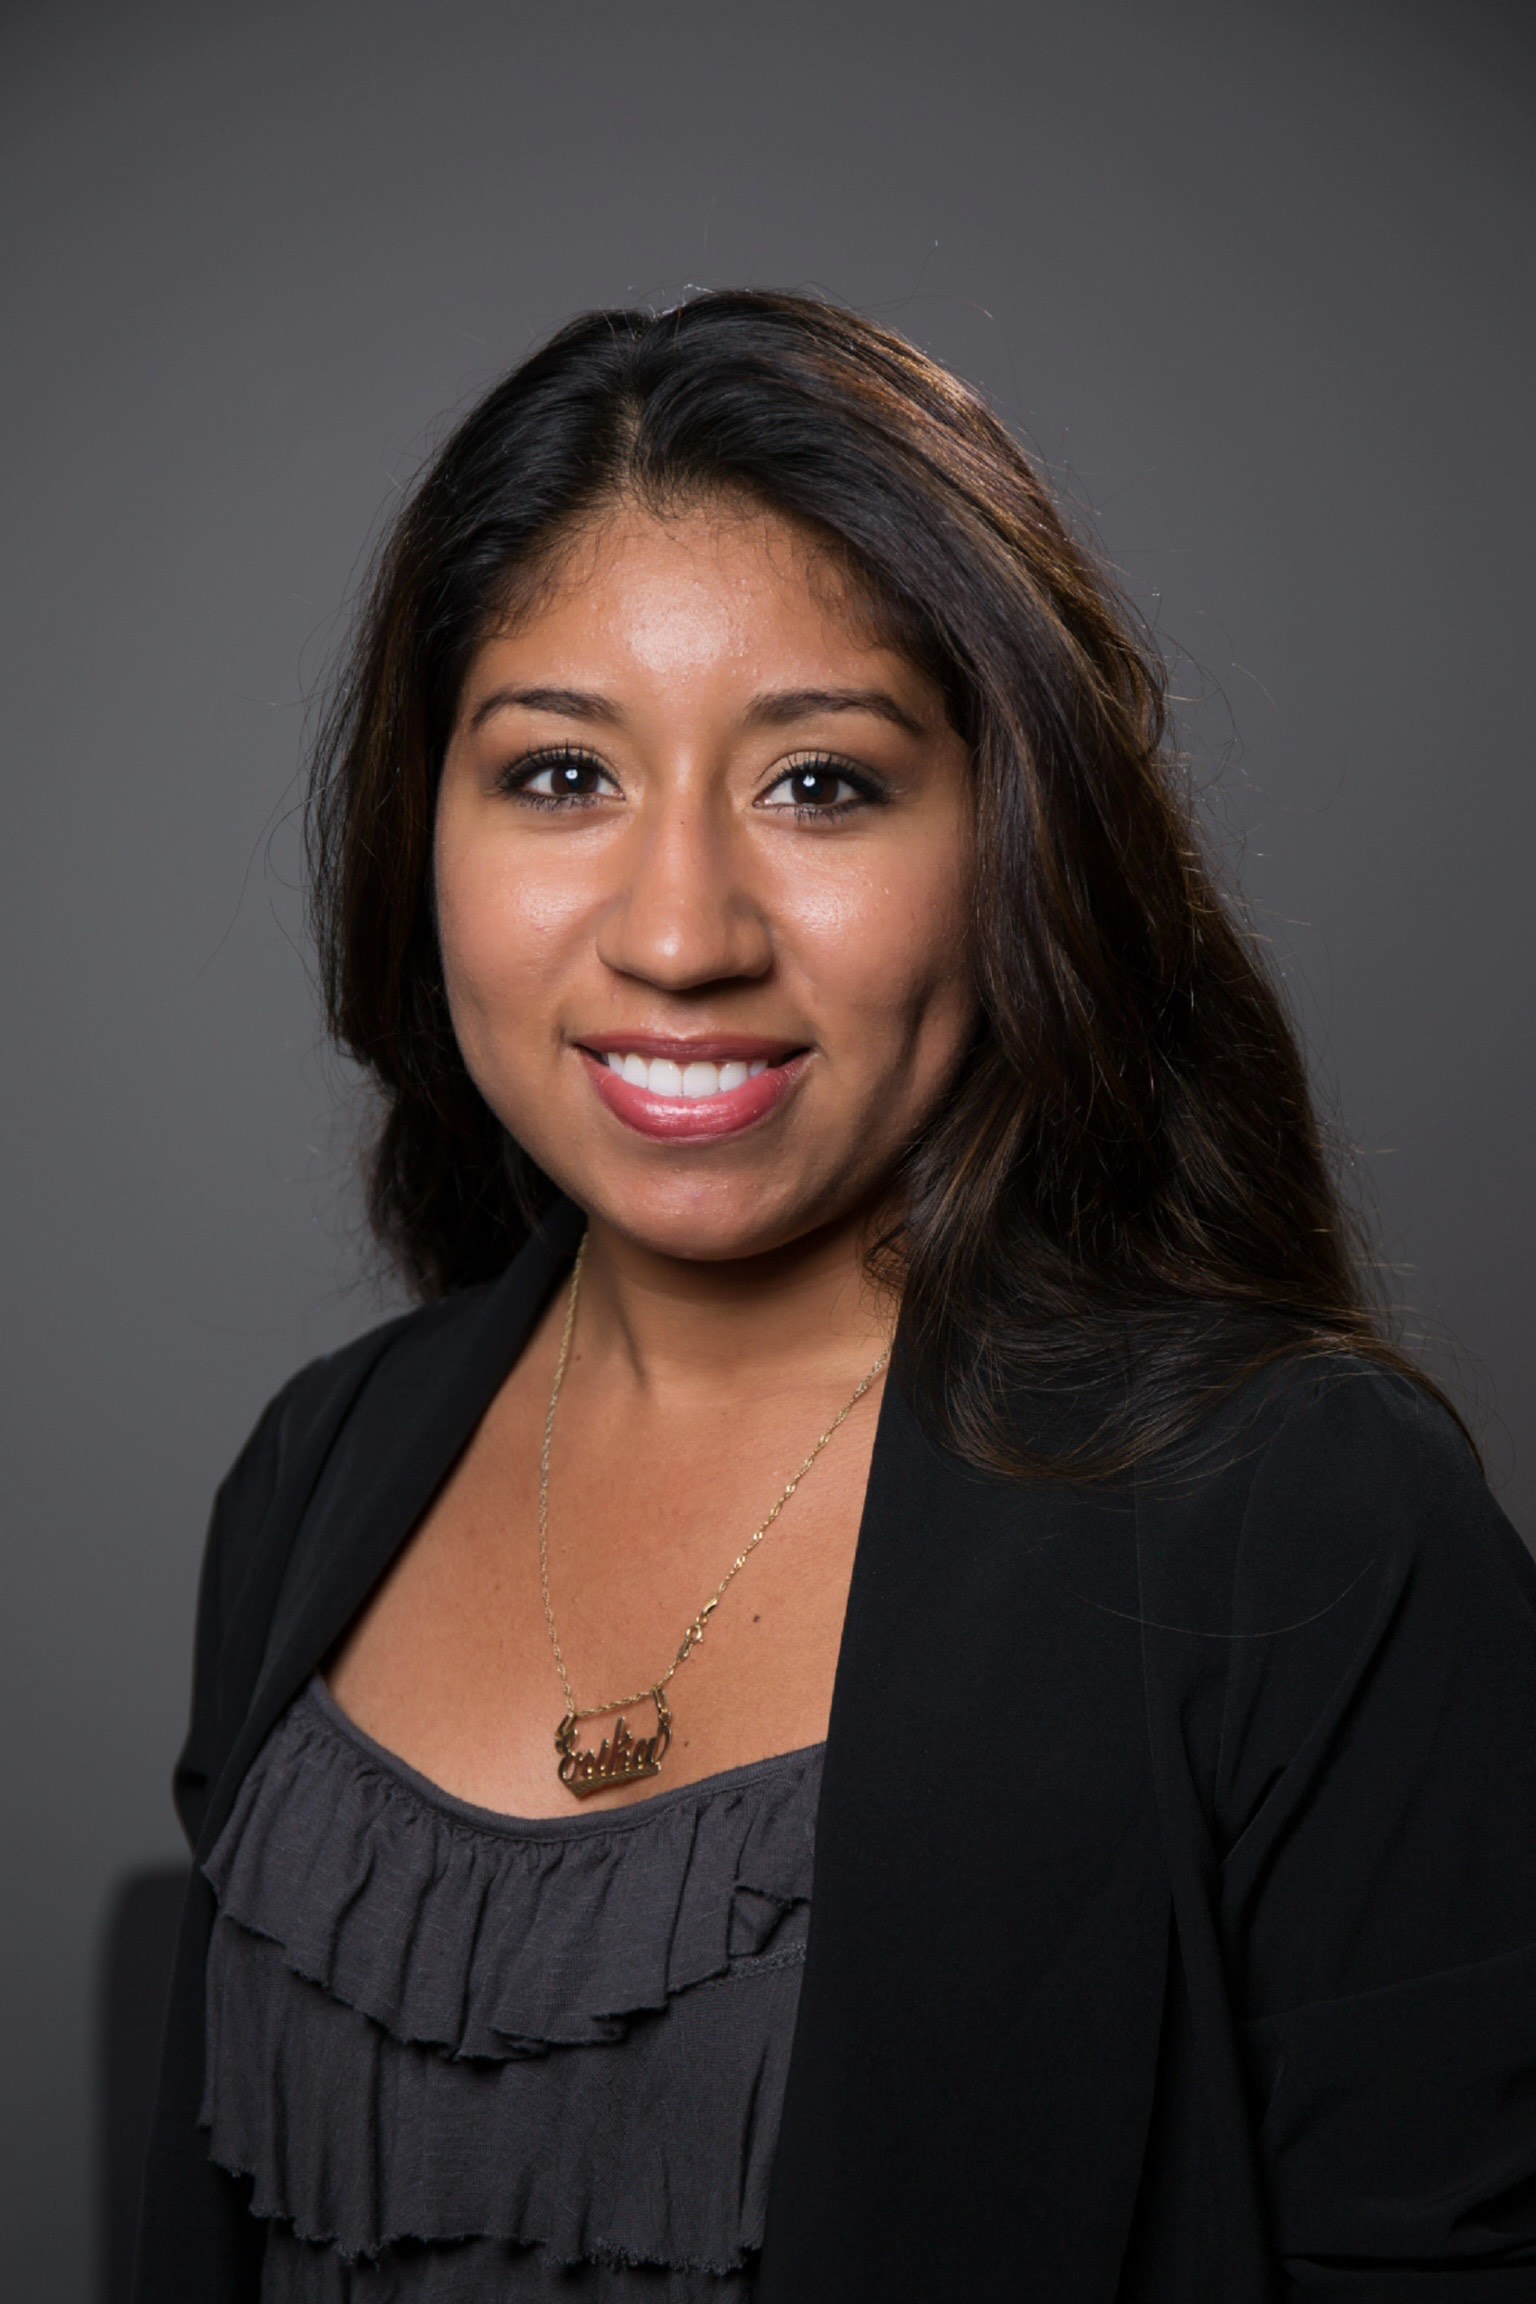 Pacific University MBA graduate Erika Chavez